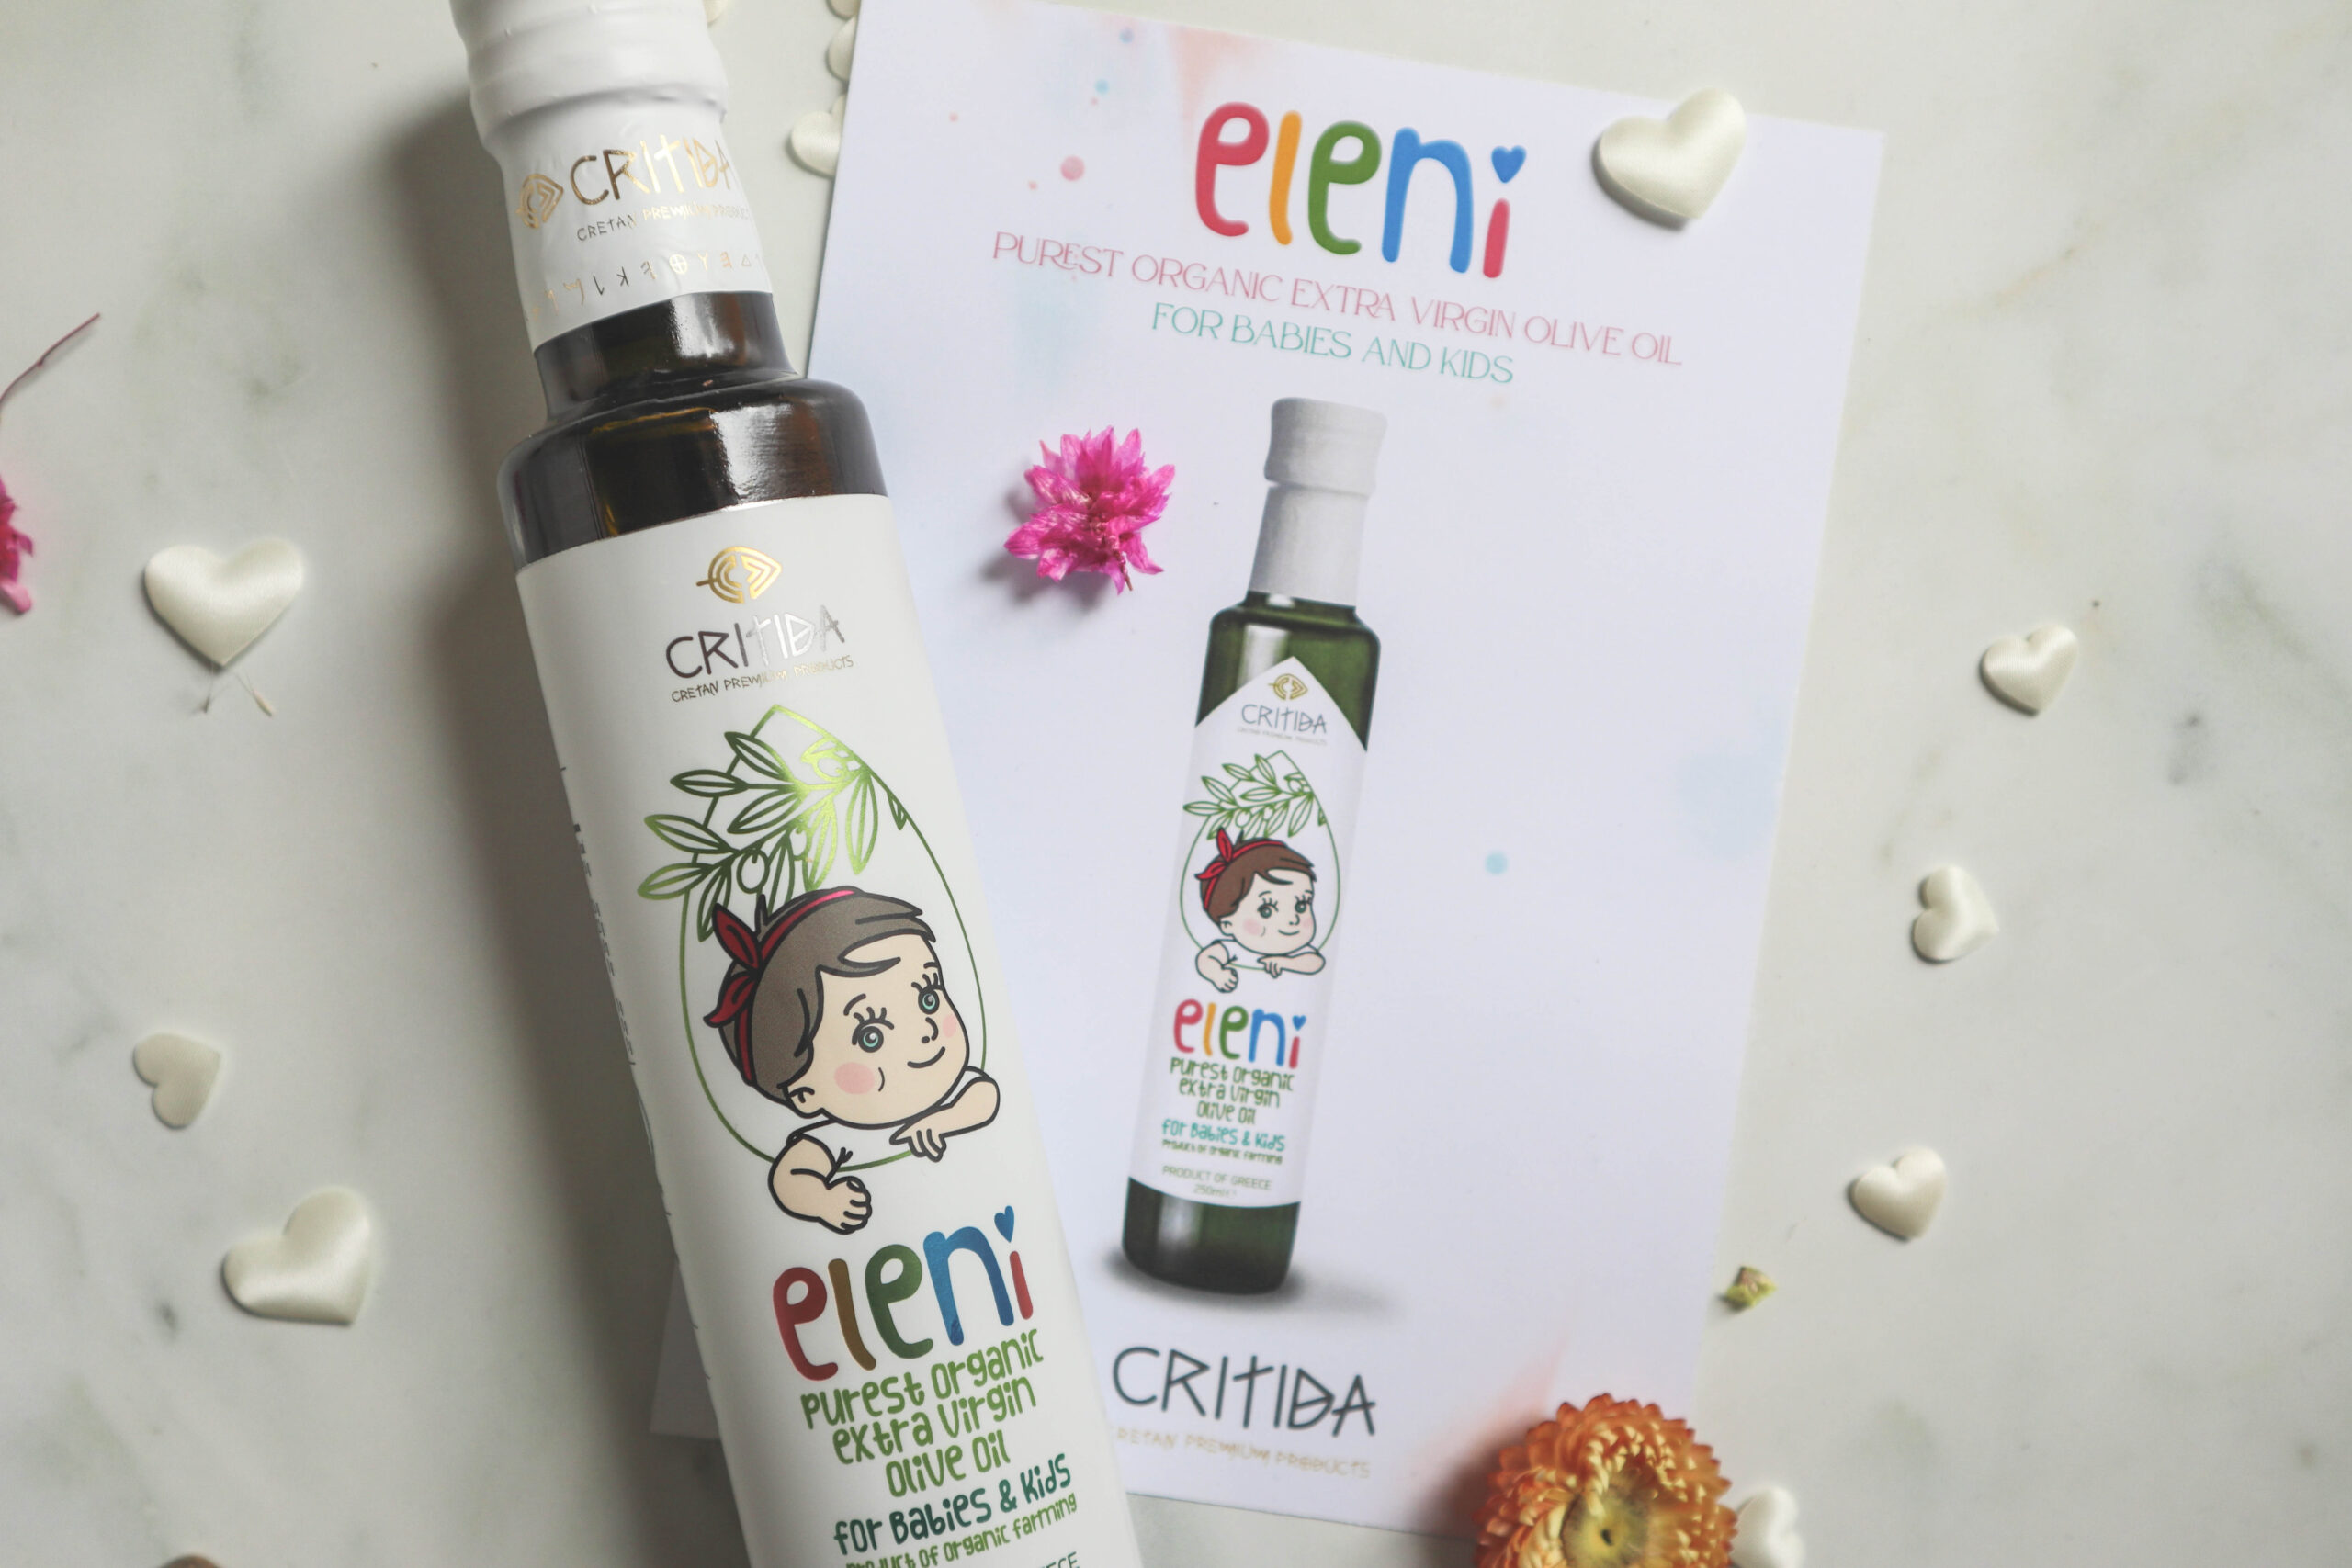 minyak zaitun extra virgin organik untuk bayi dan kanak-kanak dari Crete